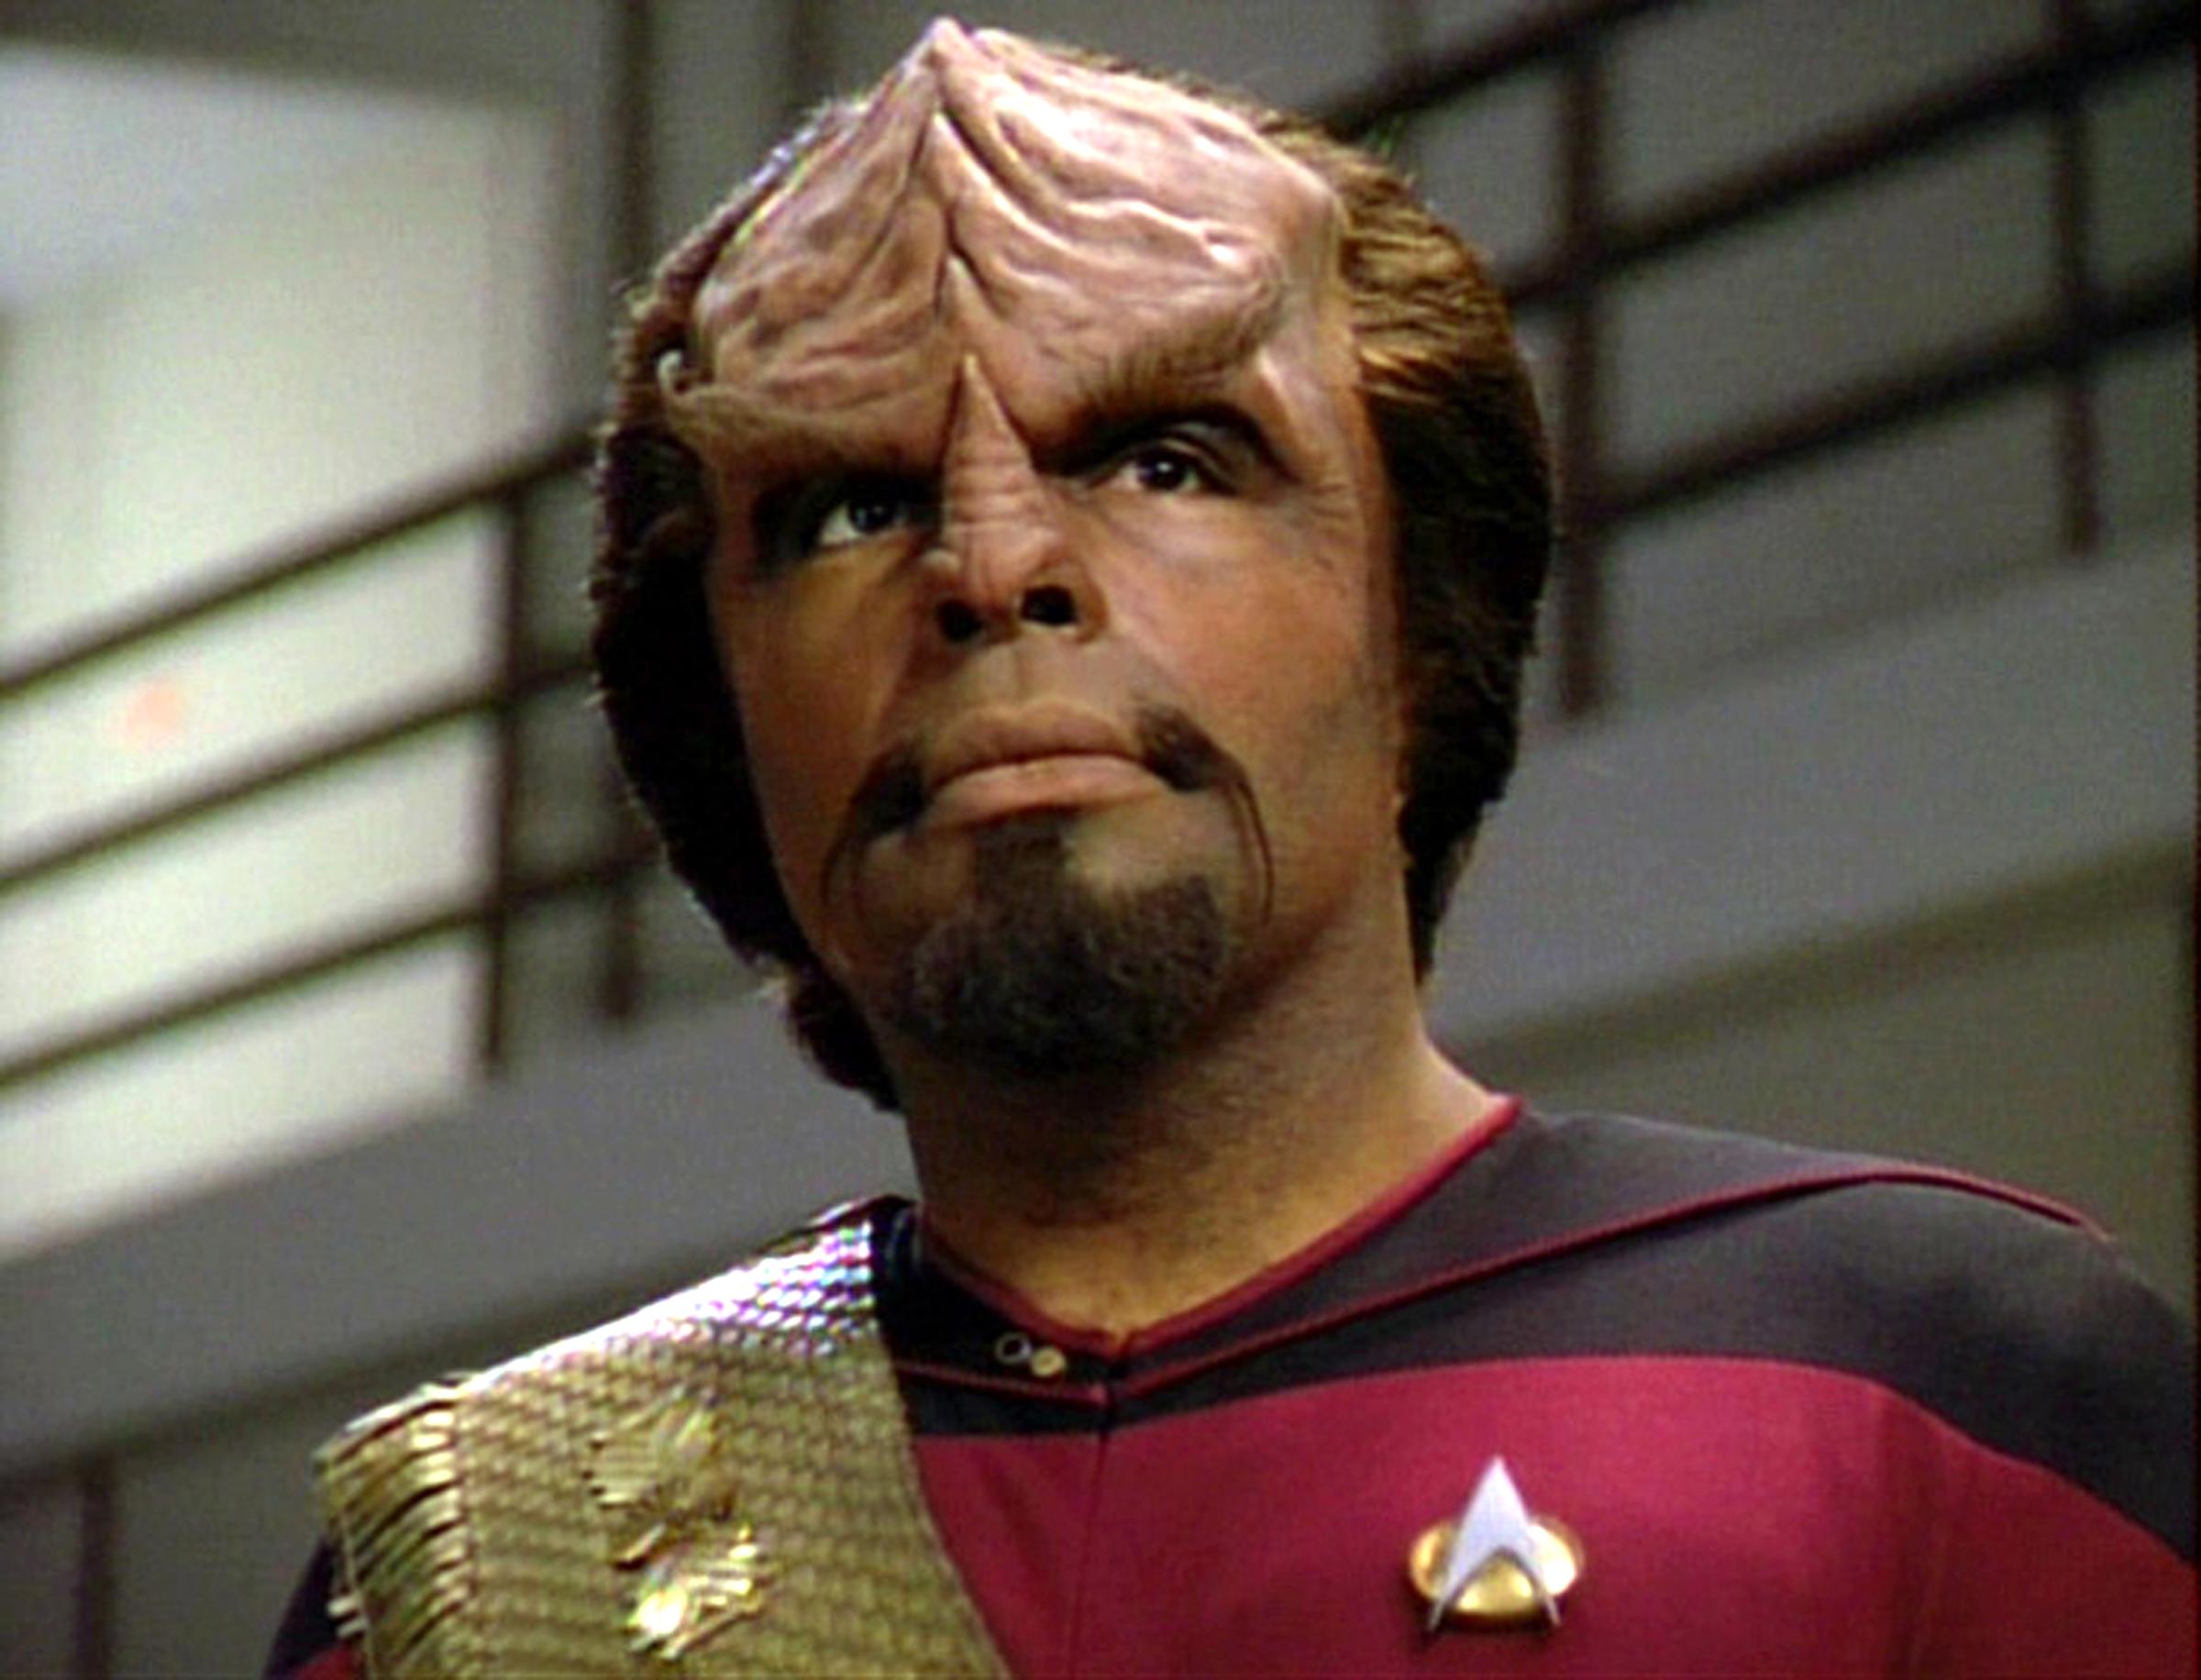 Michael Dorn as Lieutenant Worf in Star Trek: The Next Generation, May 23, 1994.